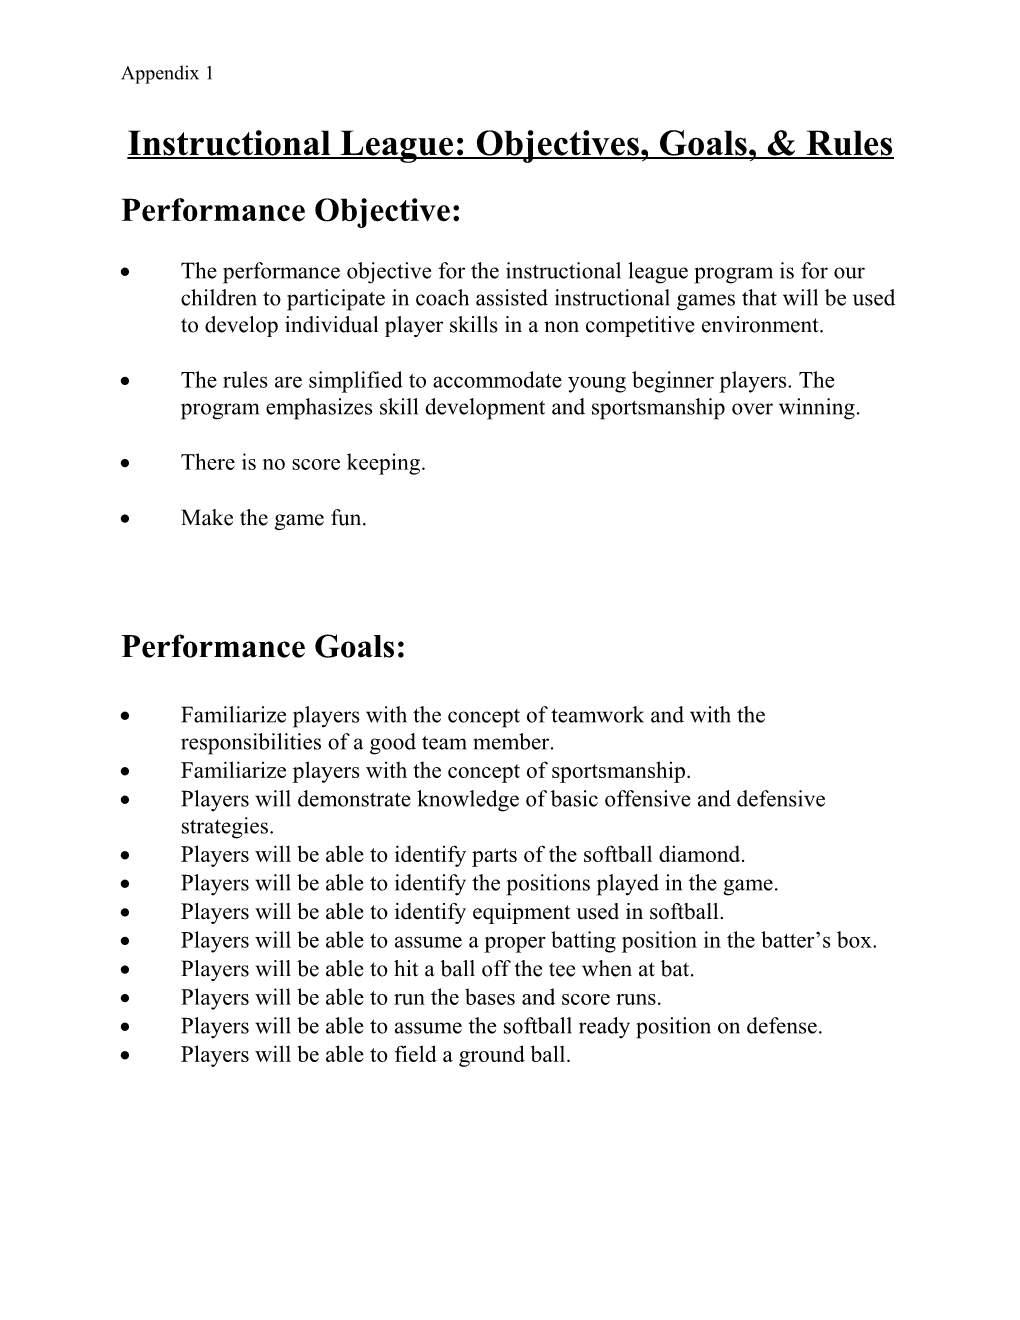 Instructional League: Objectives, Goals, & Rules